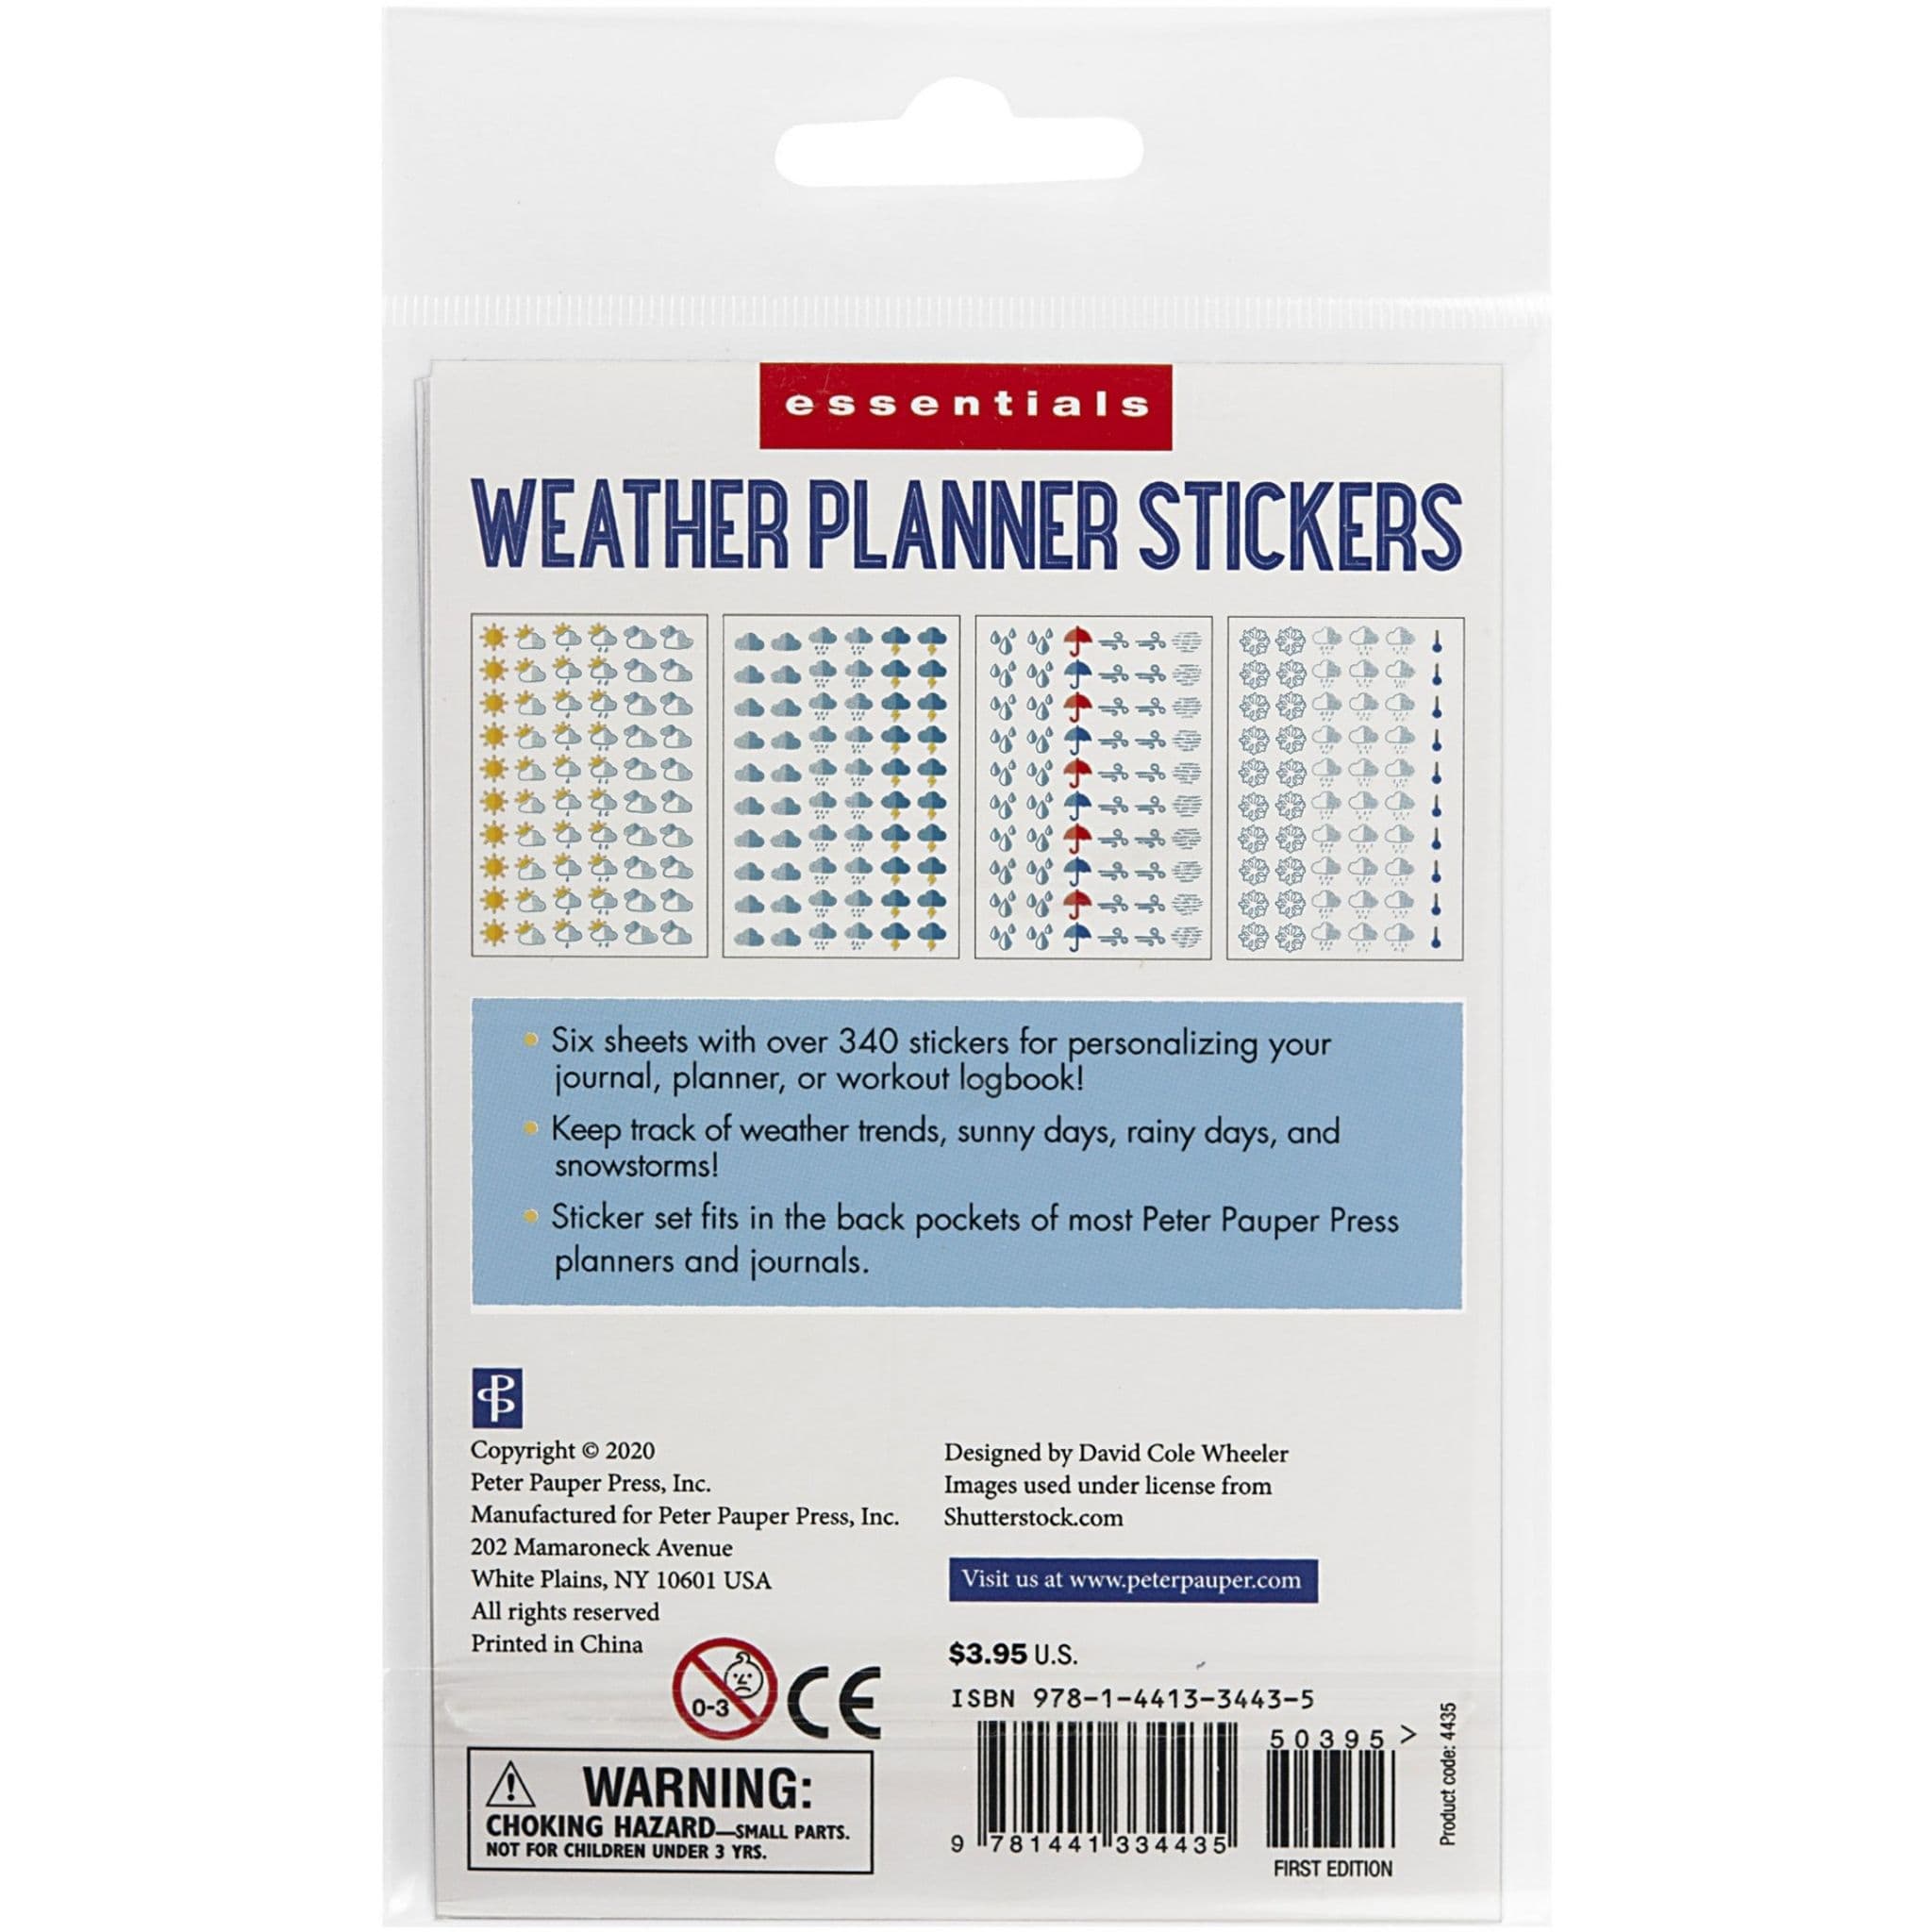 essentials weather planner stickers back side - Paper Kooka